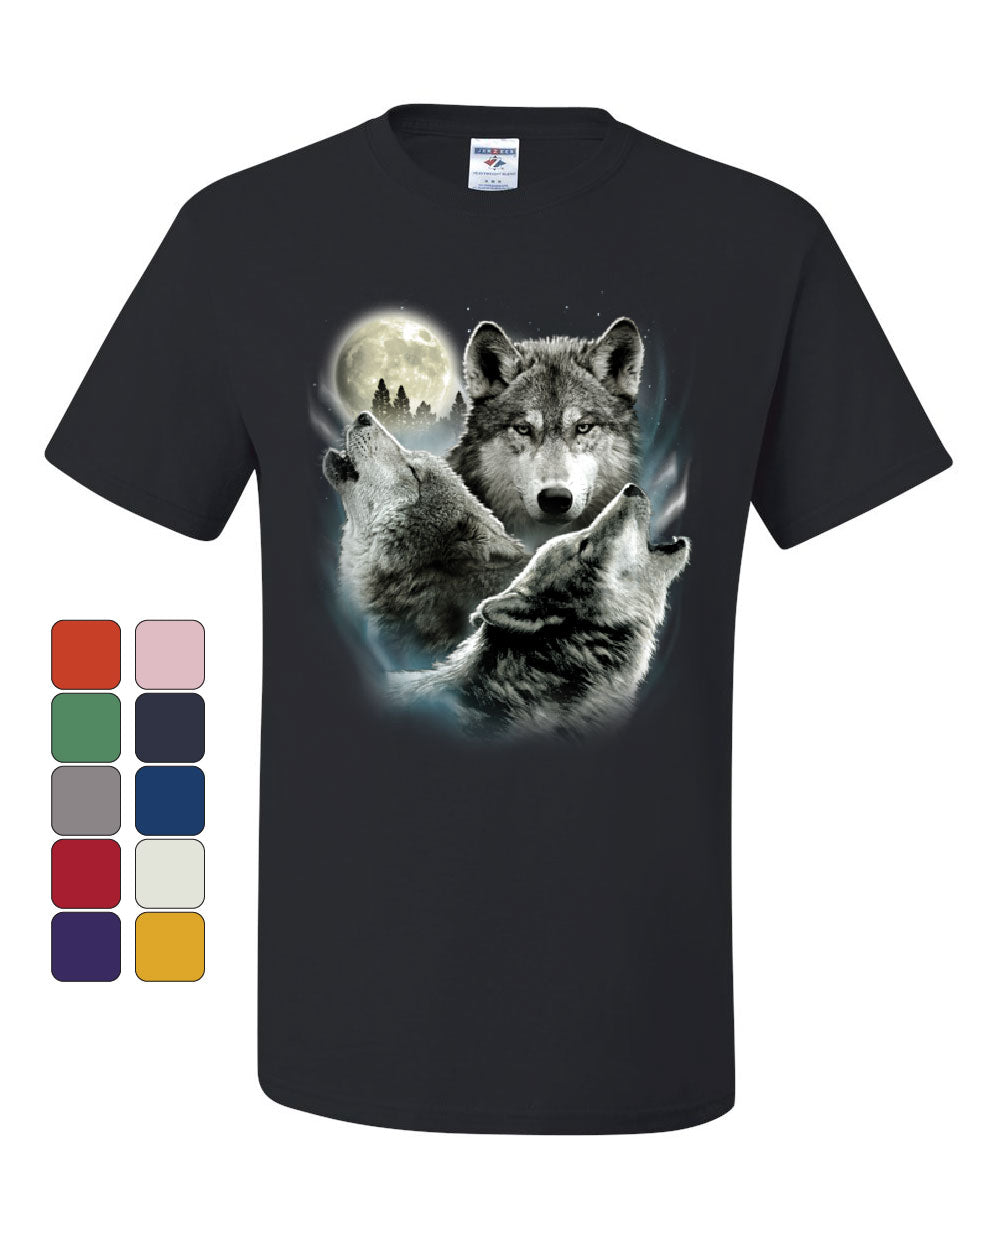 Howling Wolf Pack T-Shirt Wild Wilderness Animals Nature Moon Tee Shirt ...